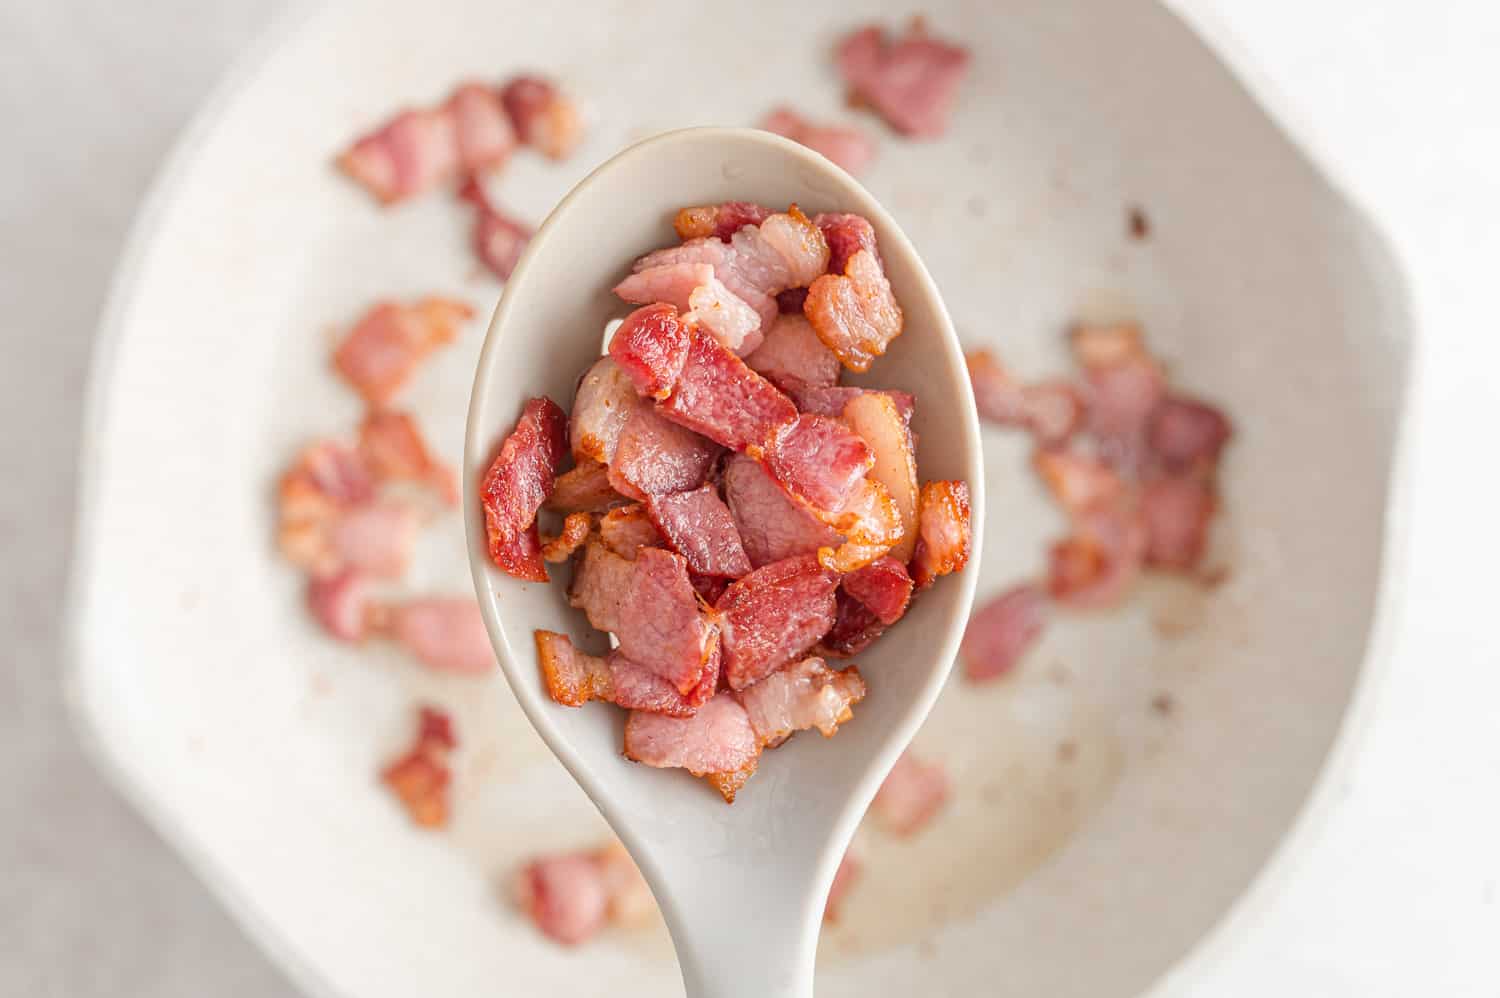 Crispy bacon in a skillet.